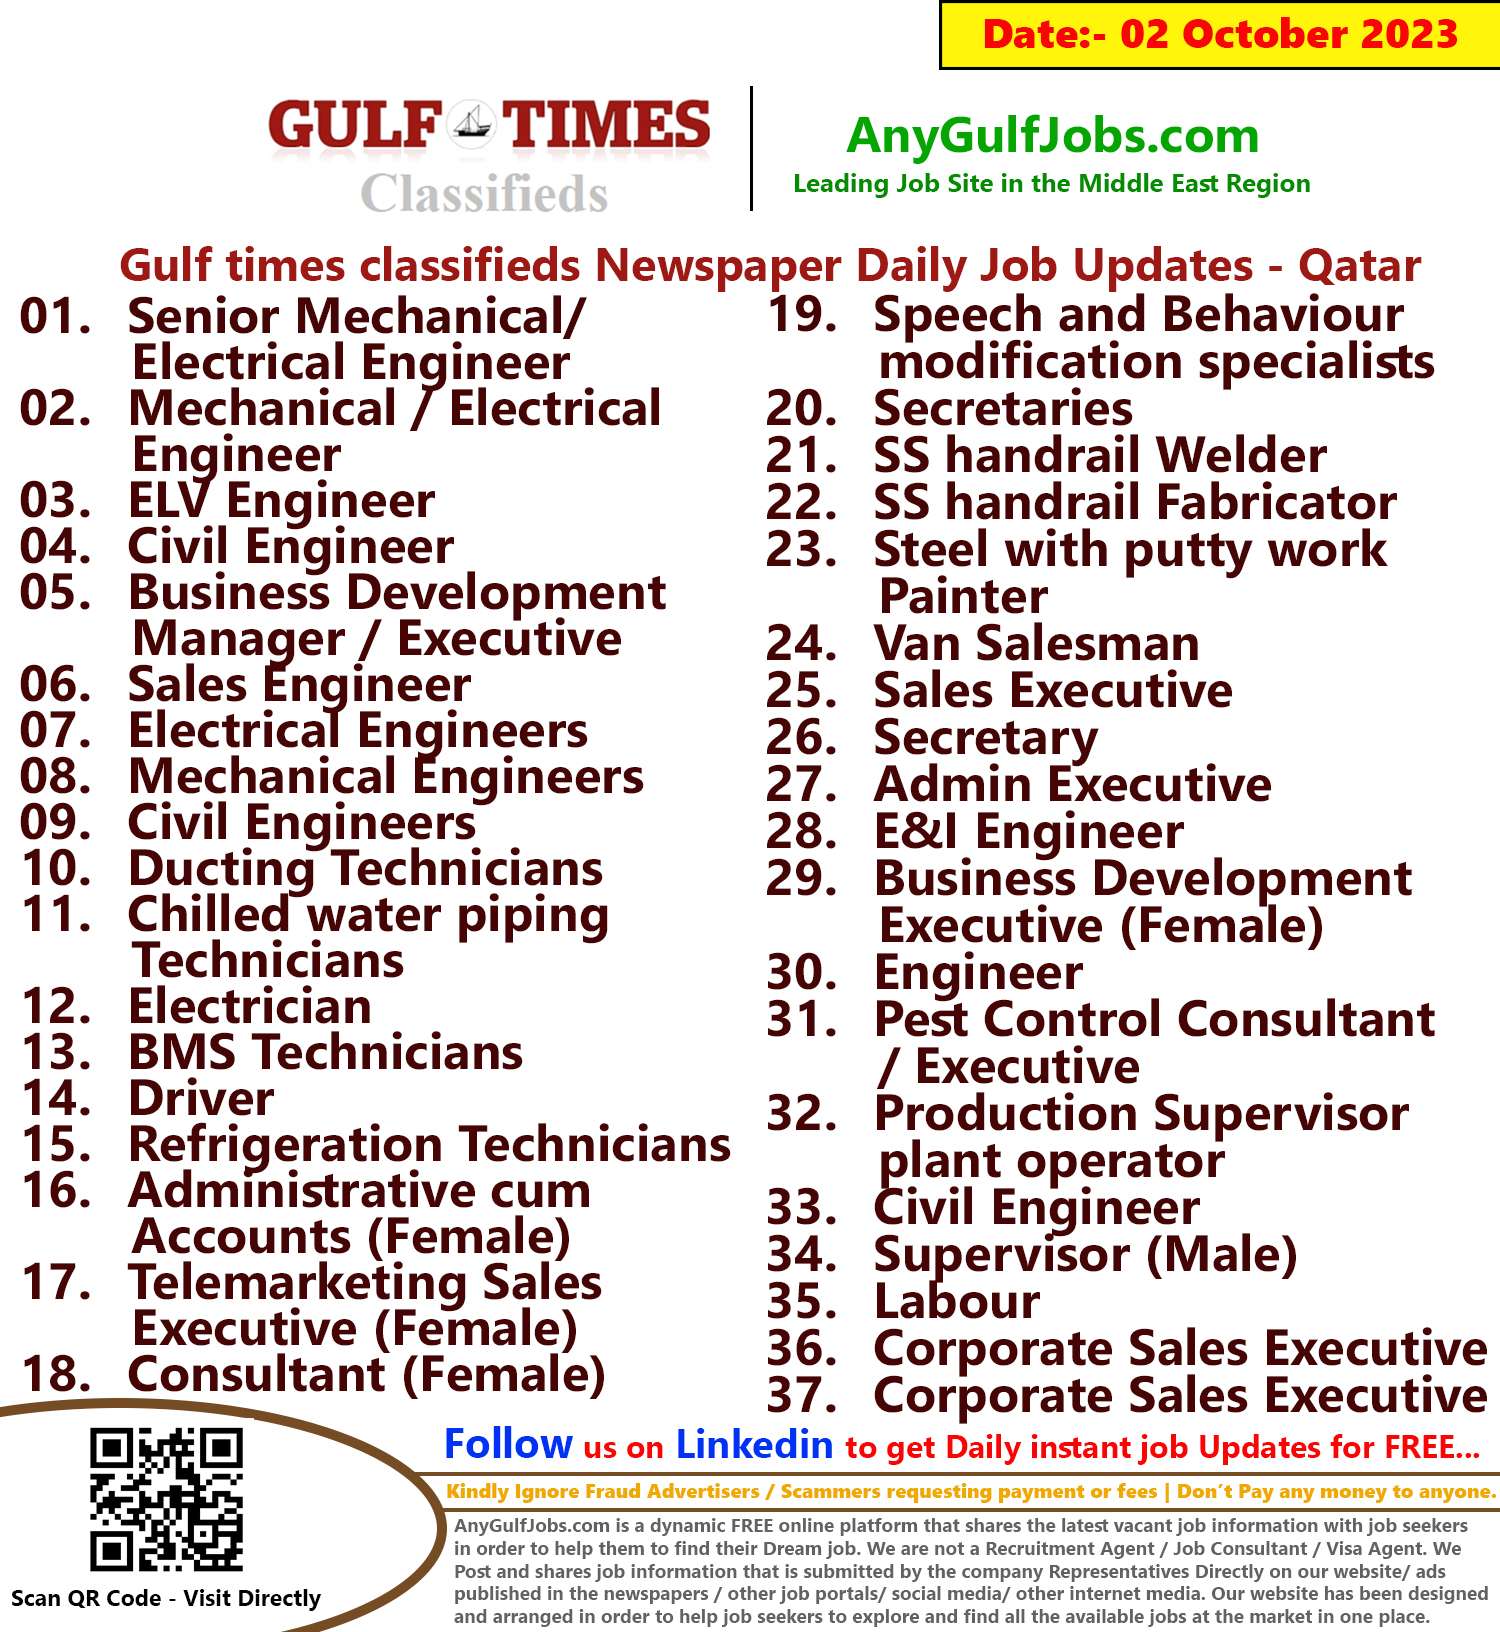 Gulf times classifieds Job Vacancies Qatar - 02 October 2023